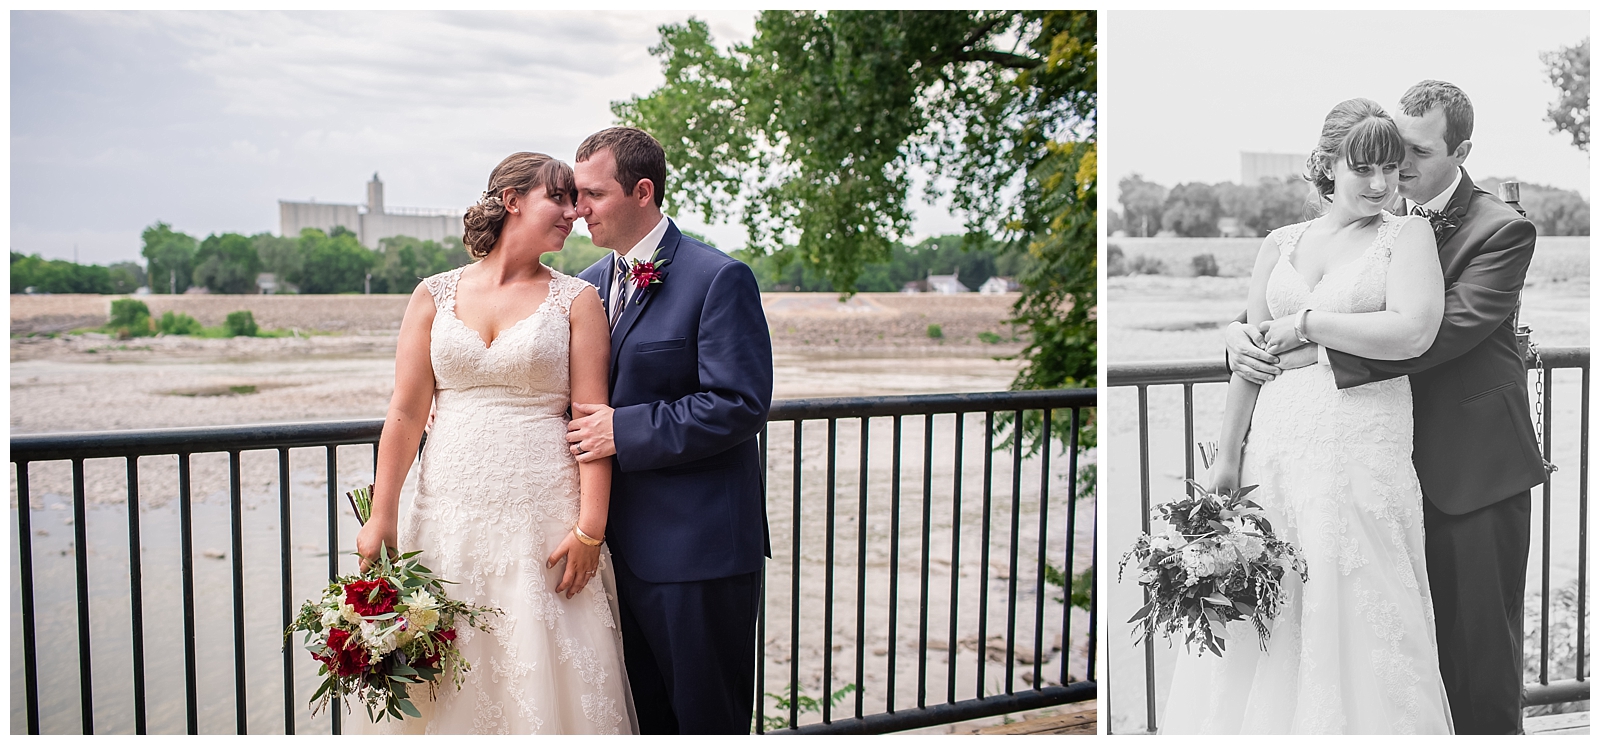 Wedding photography at Abe and Jake's Landing in Lawrence by Kansas City wedding photographers Wisdom-Watson Weddings.